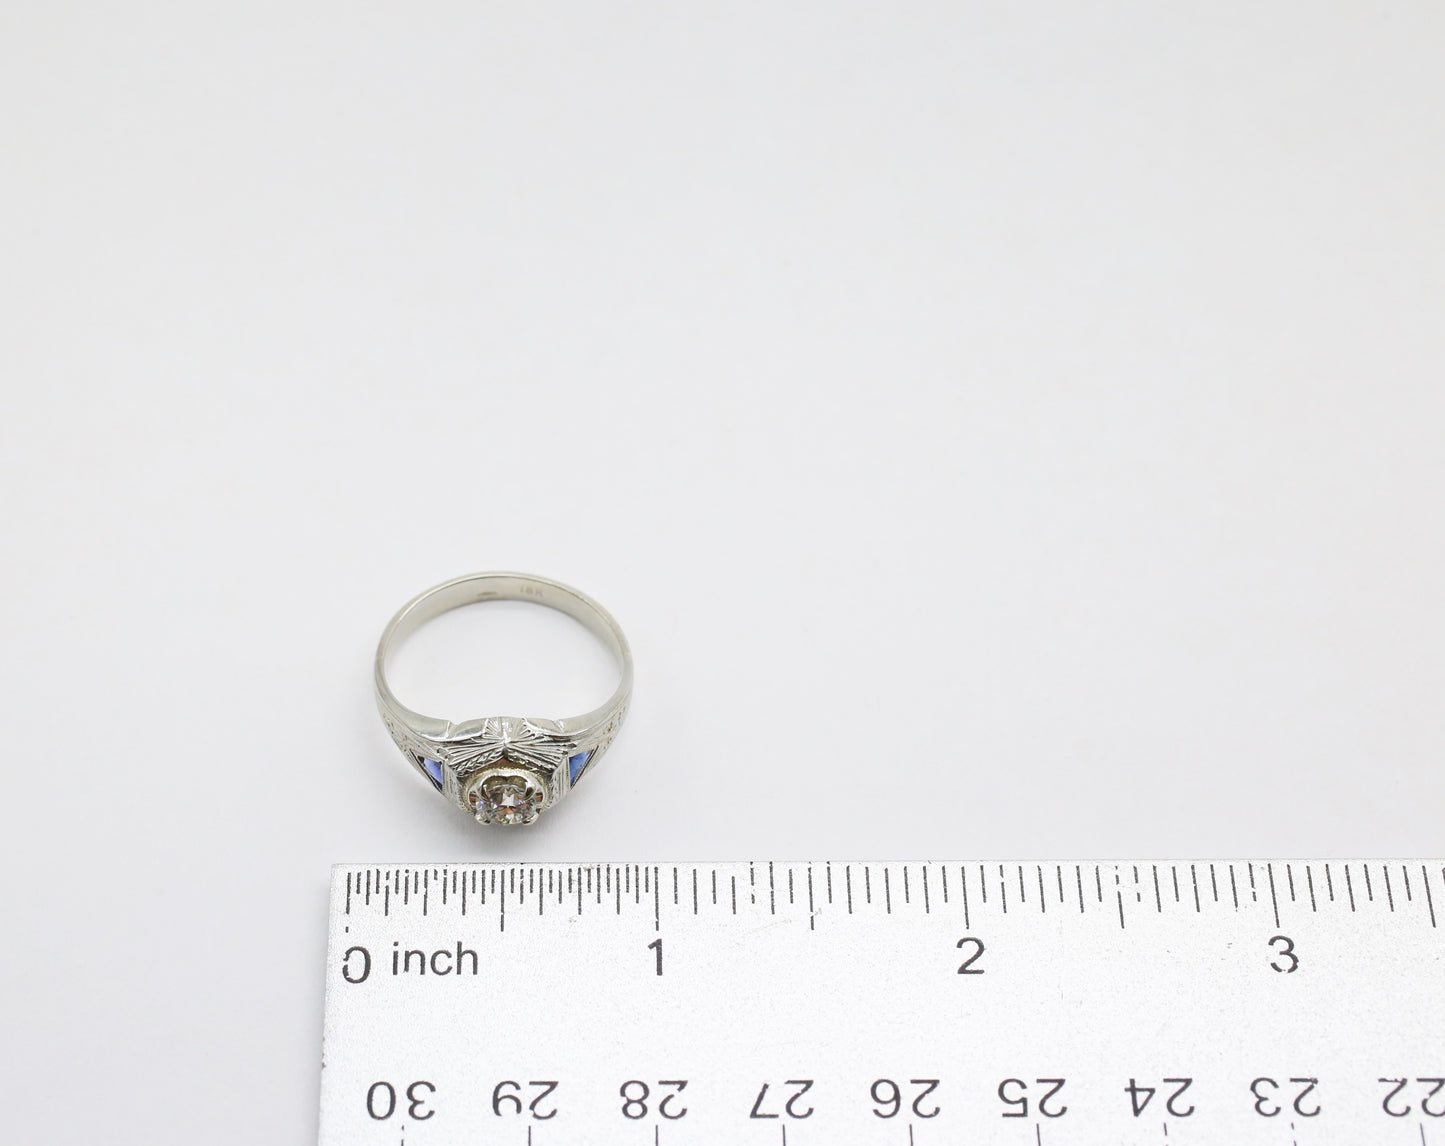 18k White Gold Diamond & Sapphire Ring, Size 10 - 5.4g